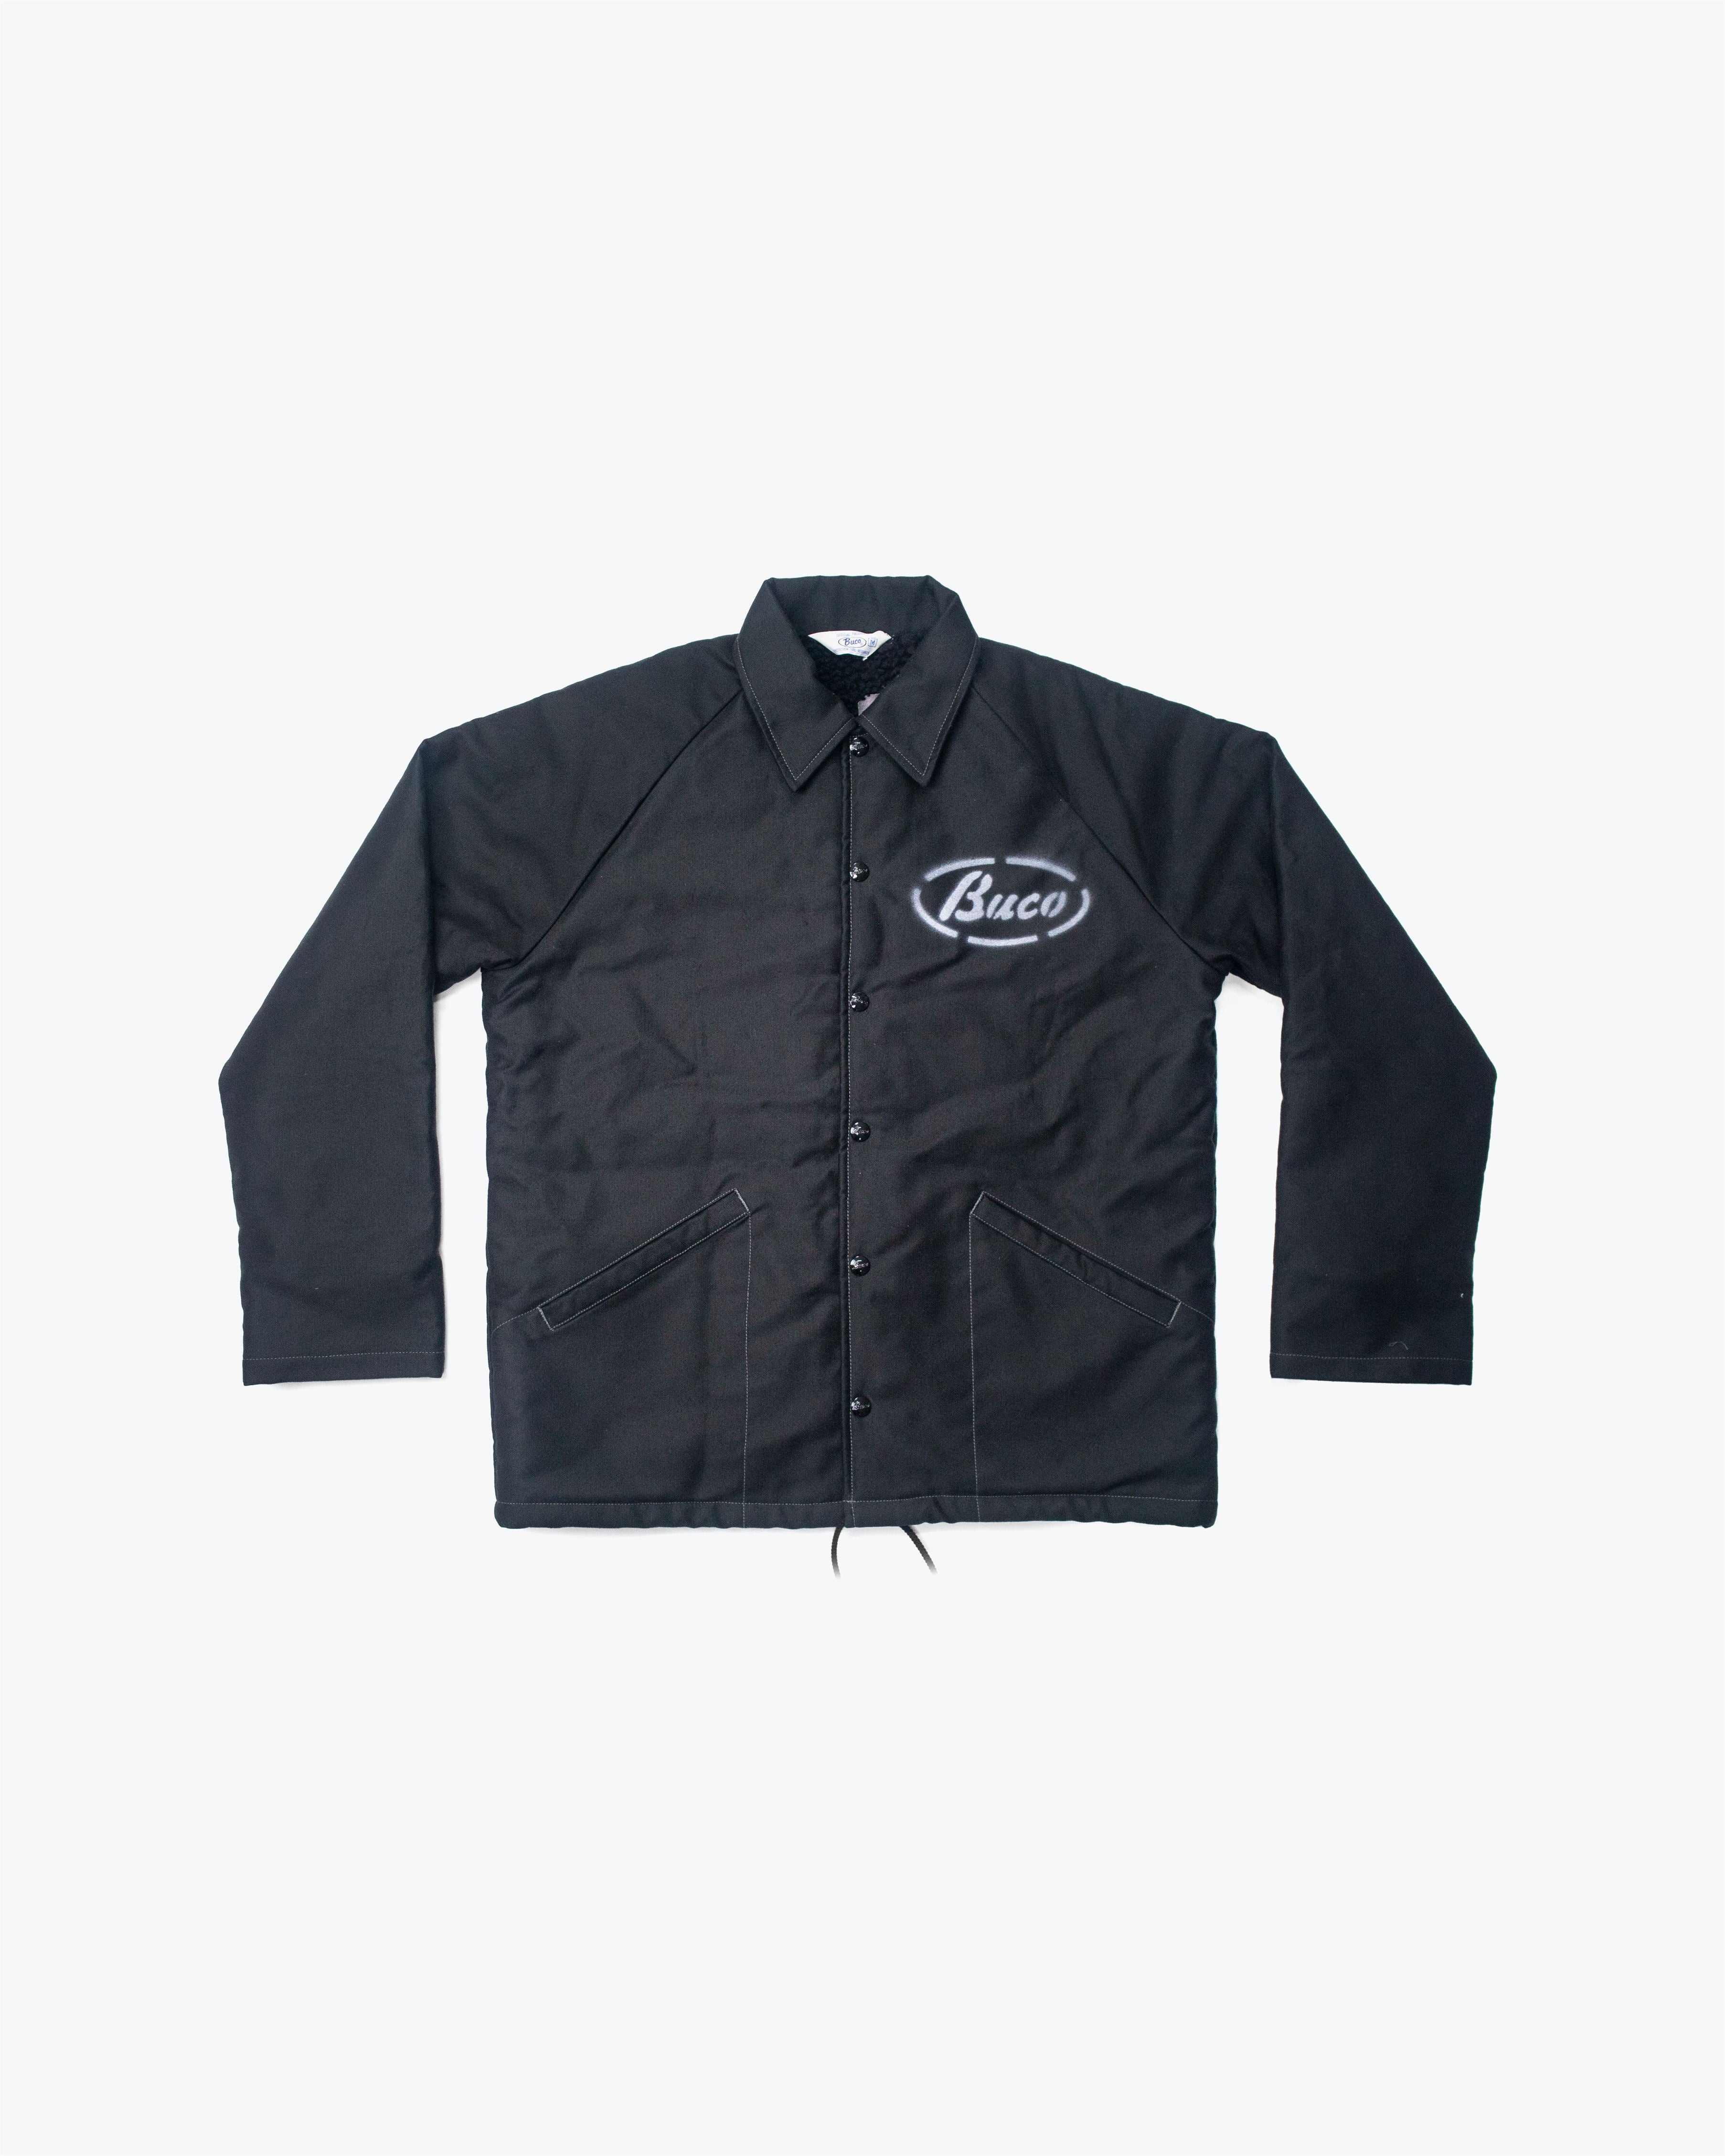 Buco Mechanic Jacket / Official Service BJ20102 | Black – The Signet Store